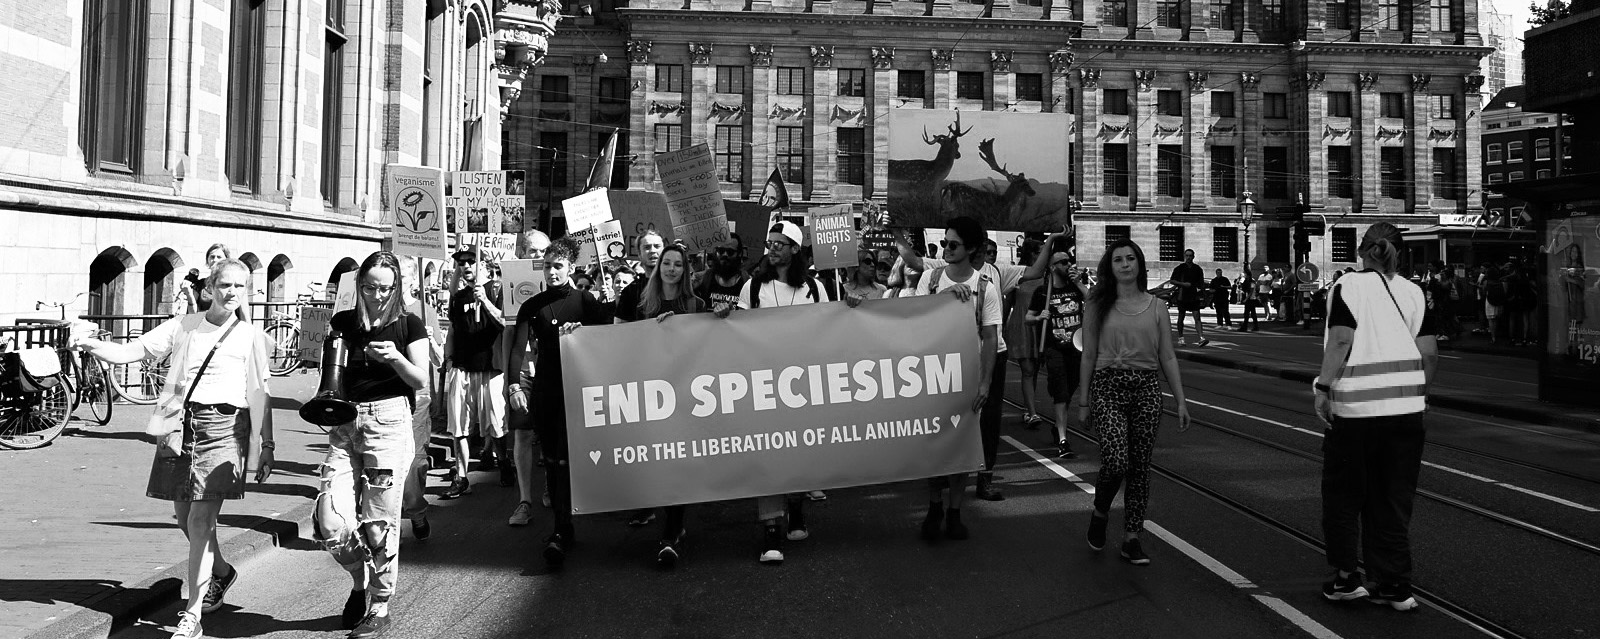 Speciesisme Animal Rights March 2018 - Brenda de Groot